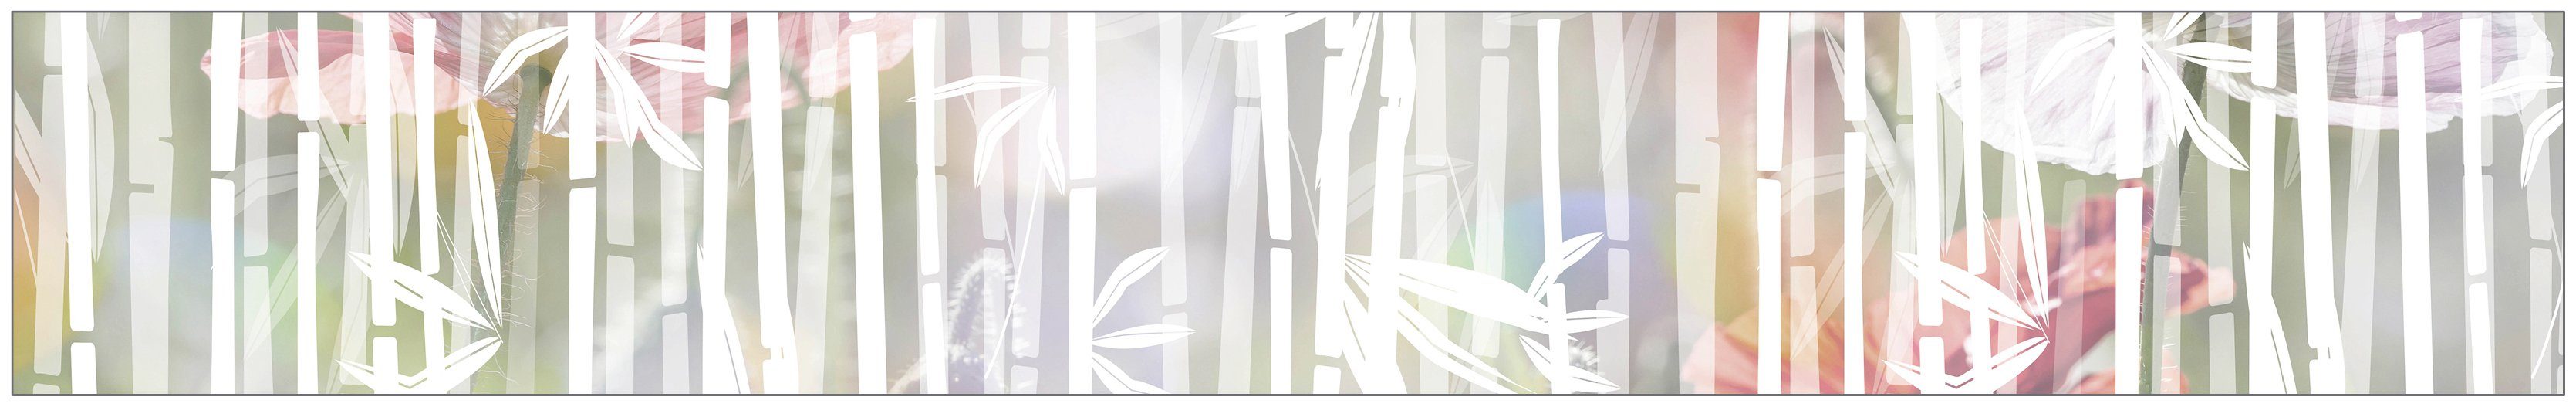 Fensterfolie Look Bamboo white, MySpotti, halbtransparent, glatt, 200 x 30 cm, statisch haftend | Fensterfolien